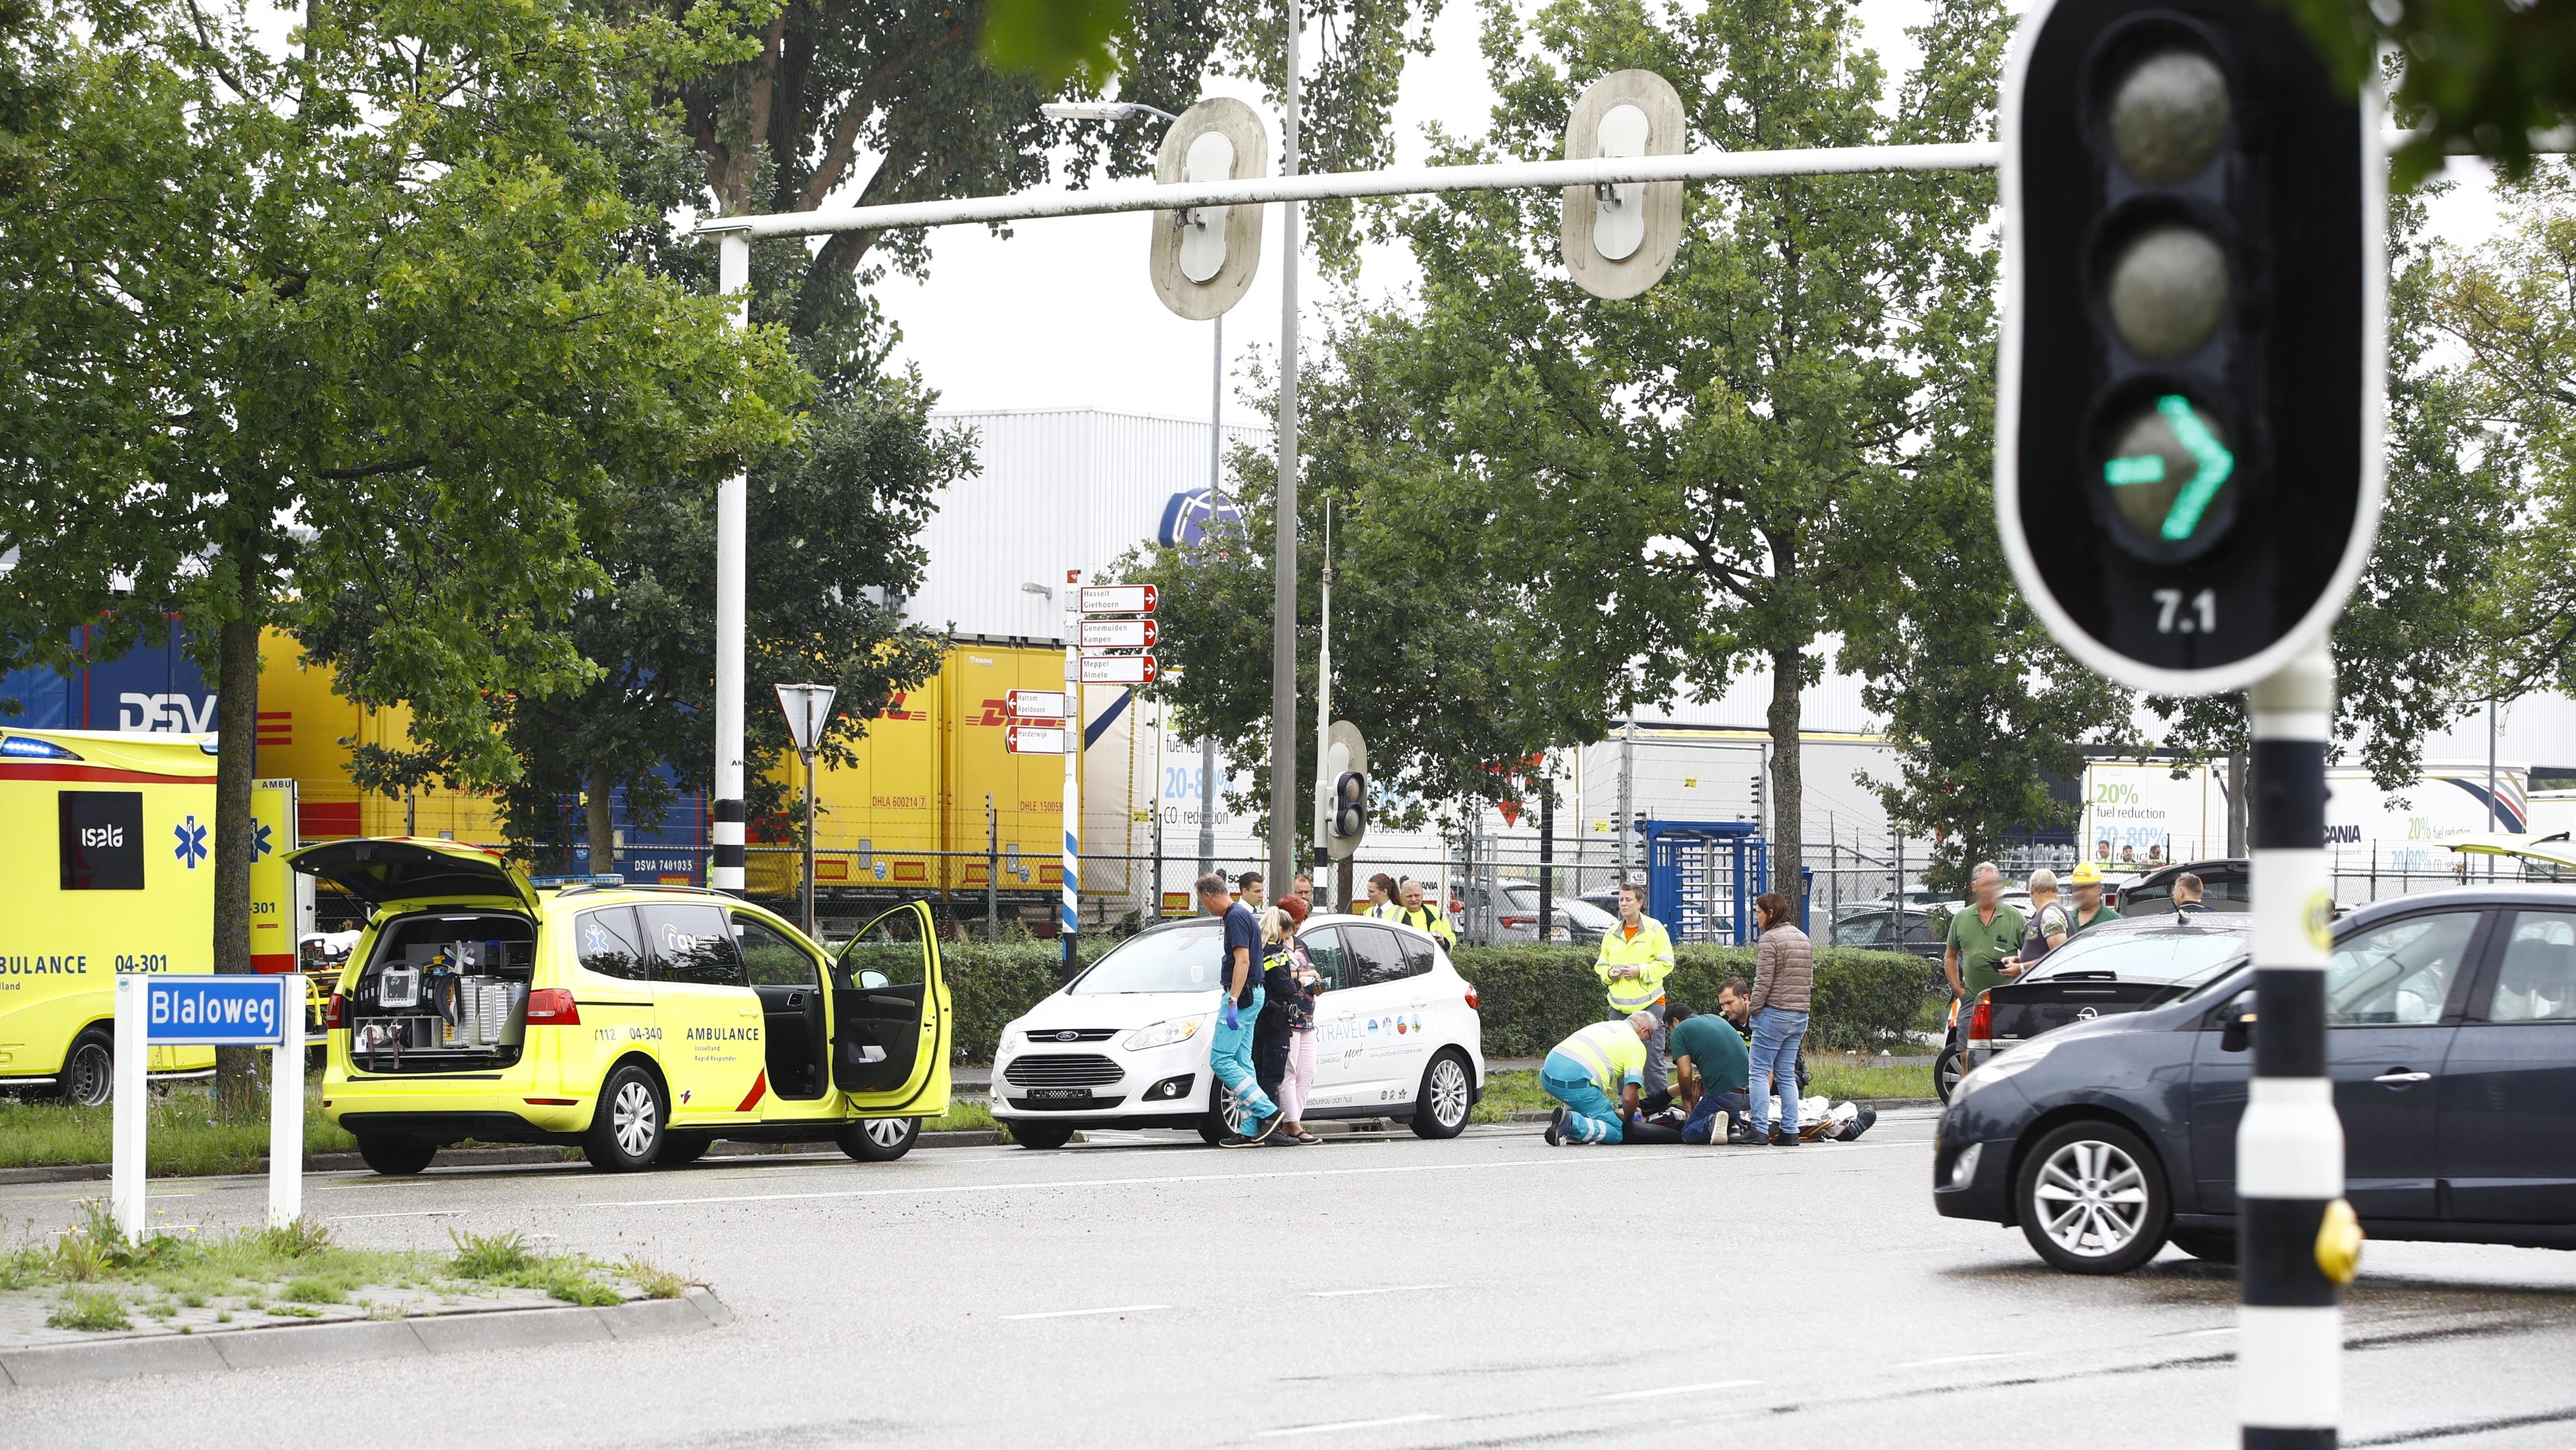 Voetganger gewond na aanrijding op kruispunt Zwolle.